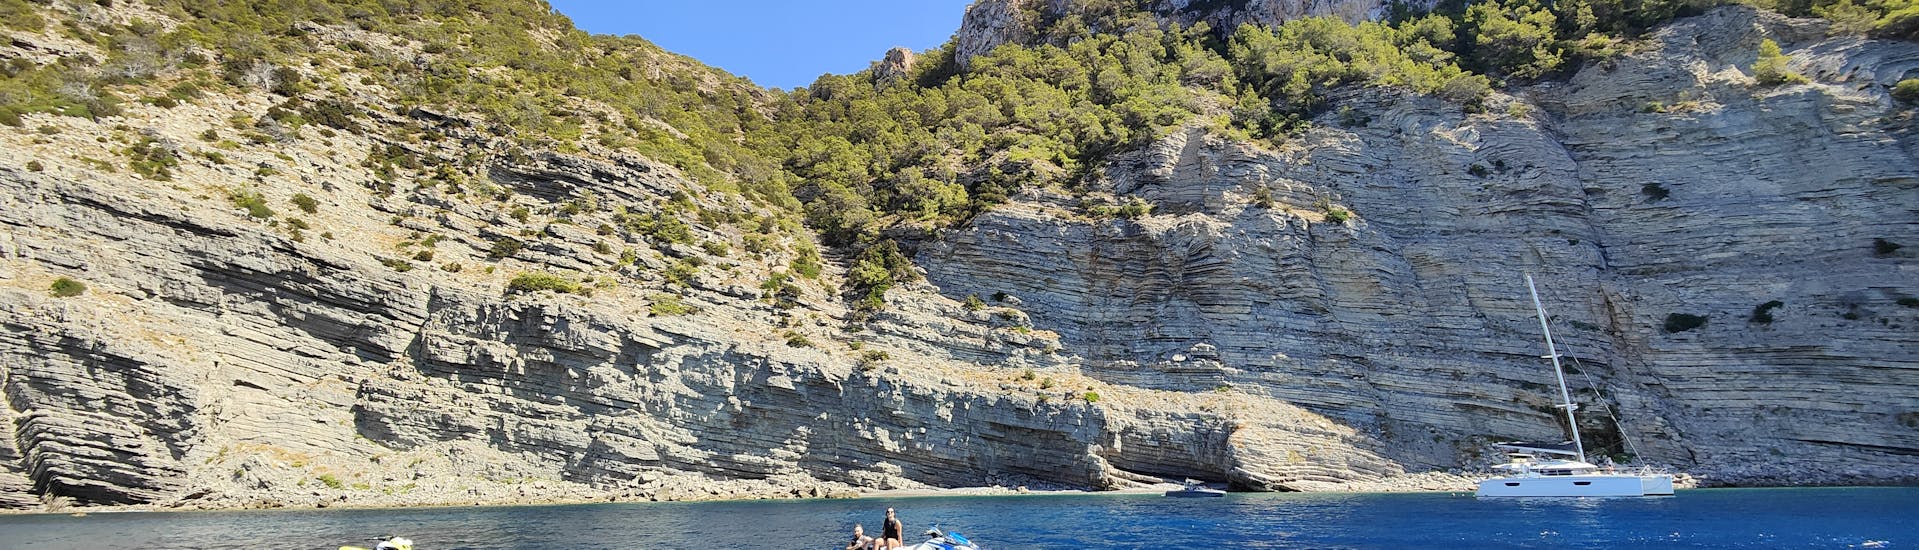 Jetski-Safari von San Antonio auf Ibiza zum Cala D'Albarca.